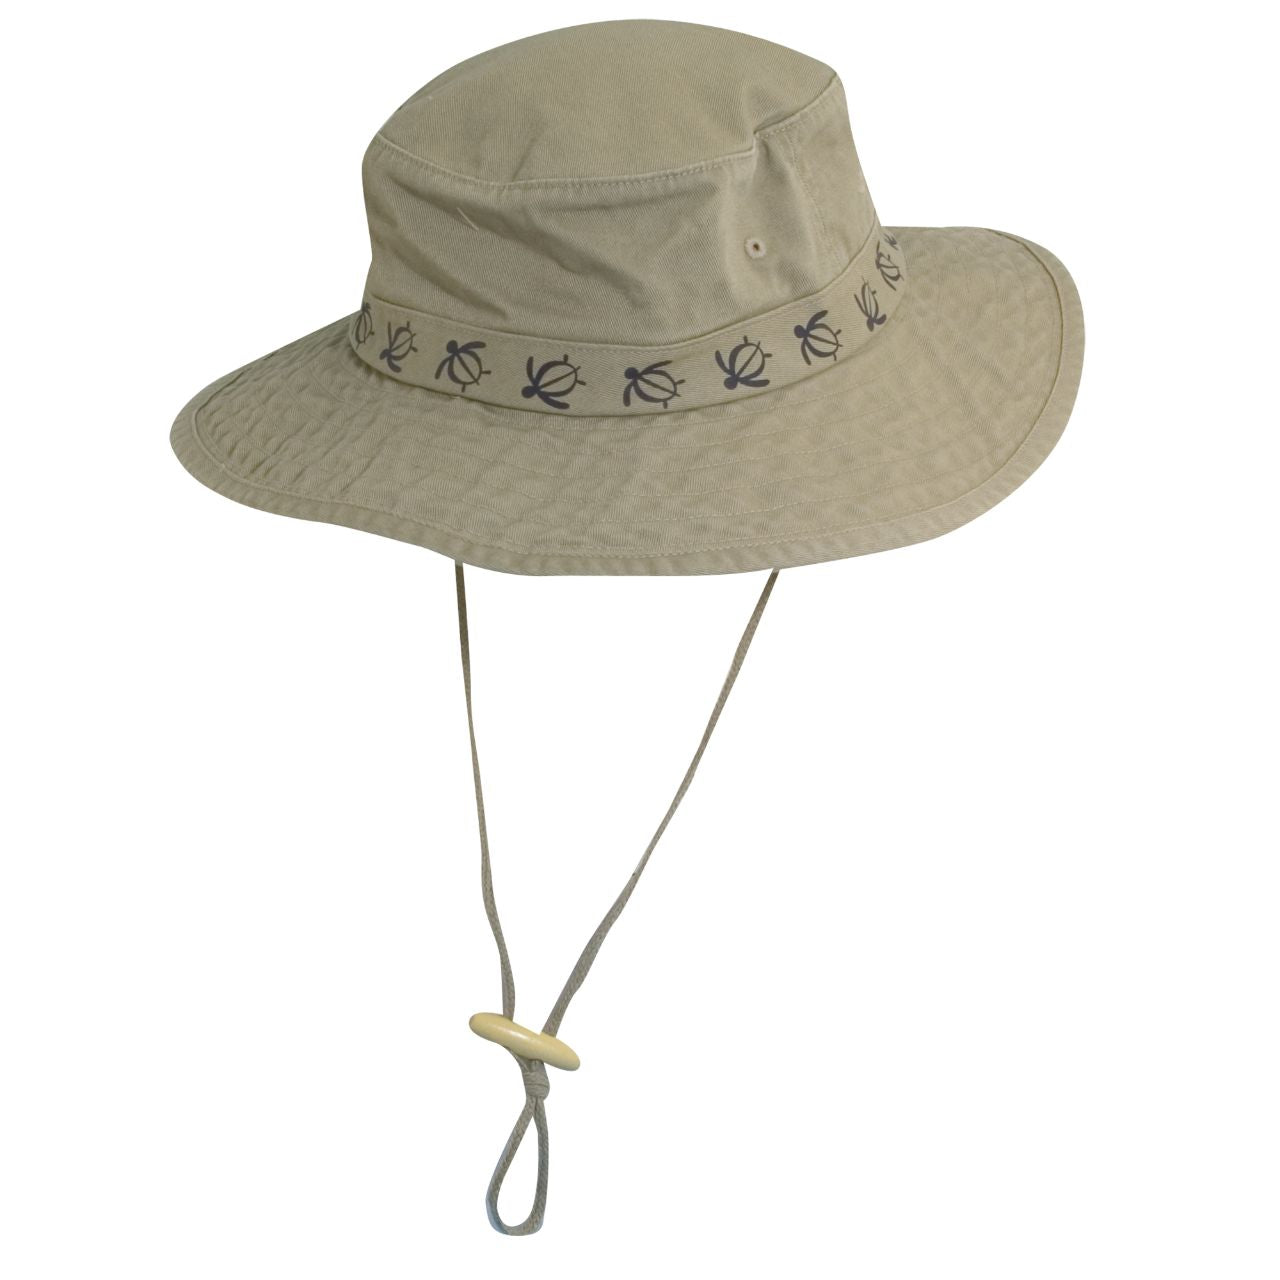 Cotton Boonie Hat with Turtle Tape Band - DPC Outdoor Hats Bucket Hat Dorfman Hat Co. bh159KHM Khaki/Navy Medium (57 cm) 